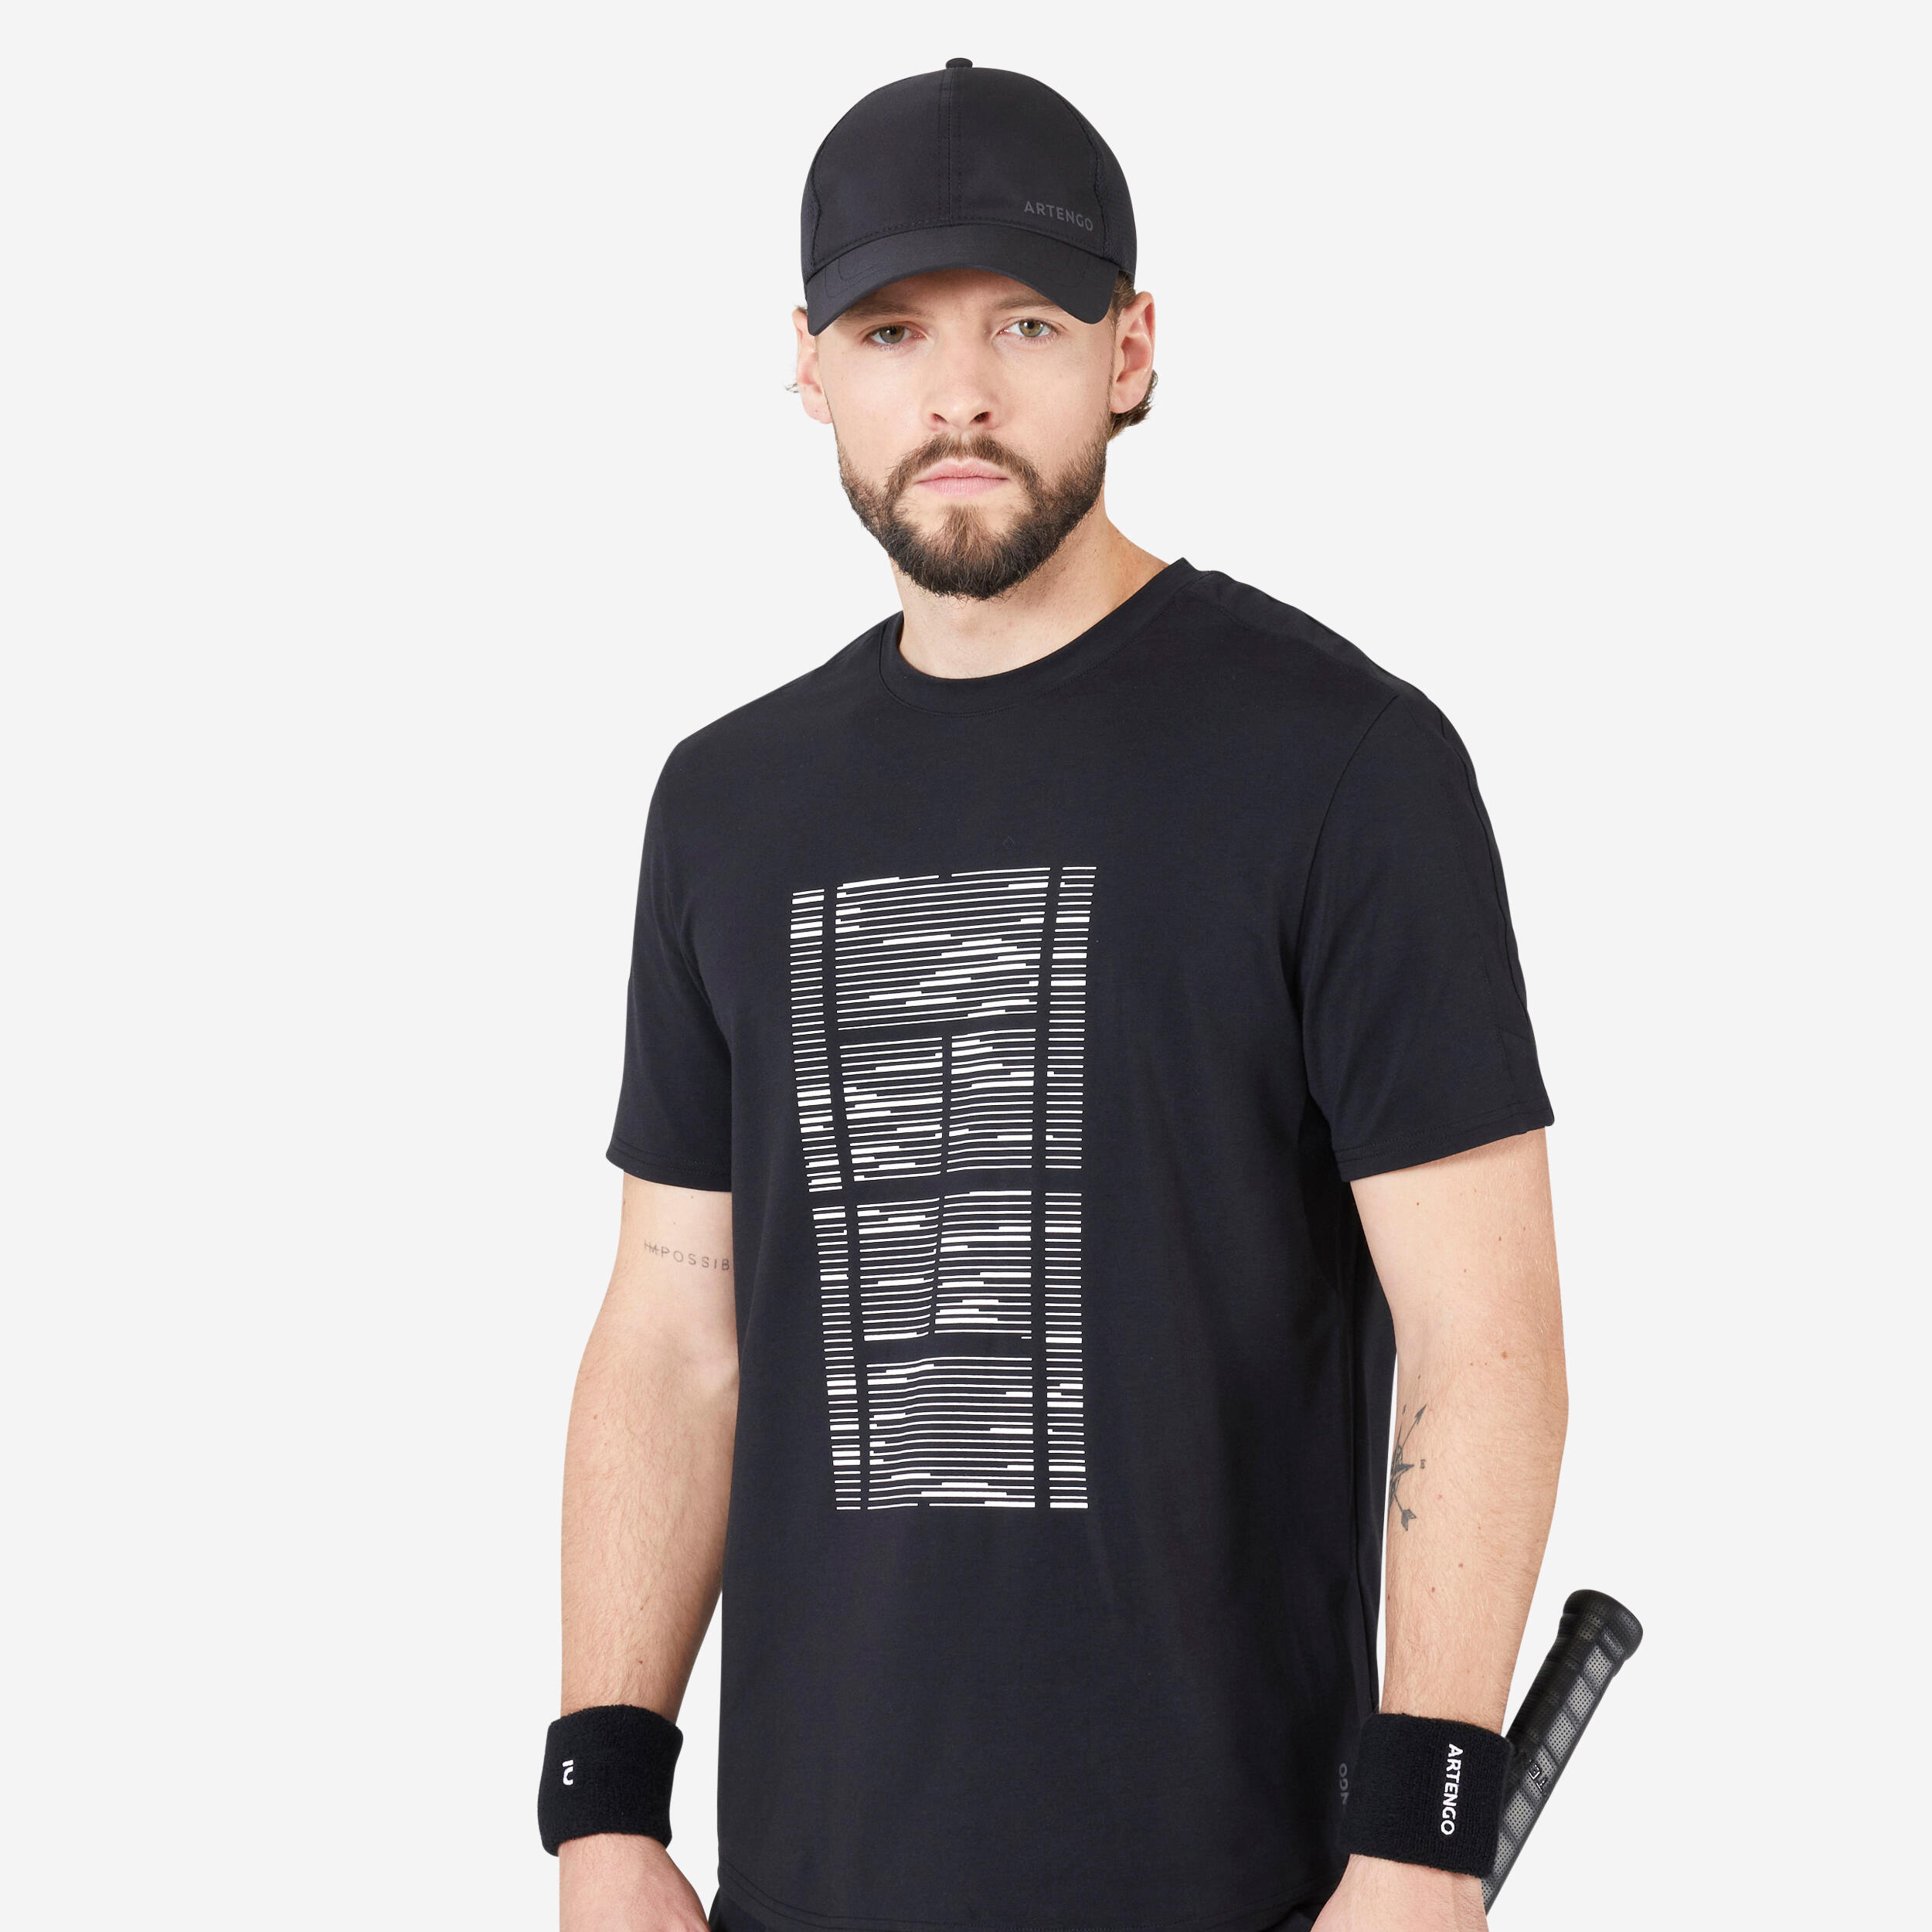 ARTENGO Men's Tennis T-Shirt Soft - Black